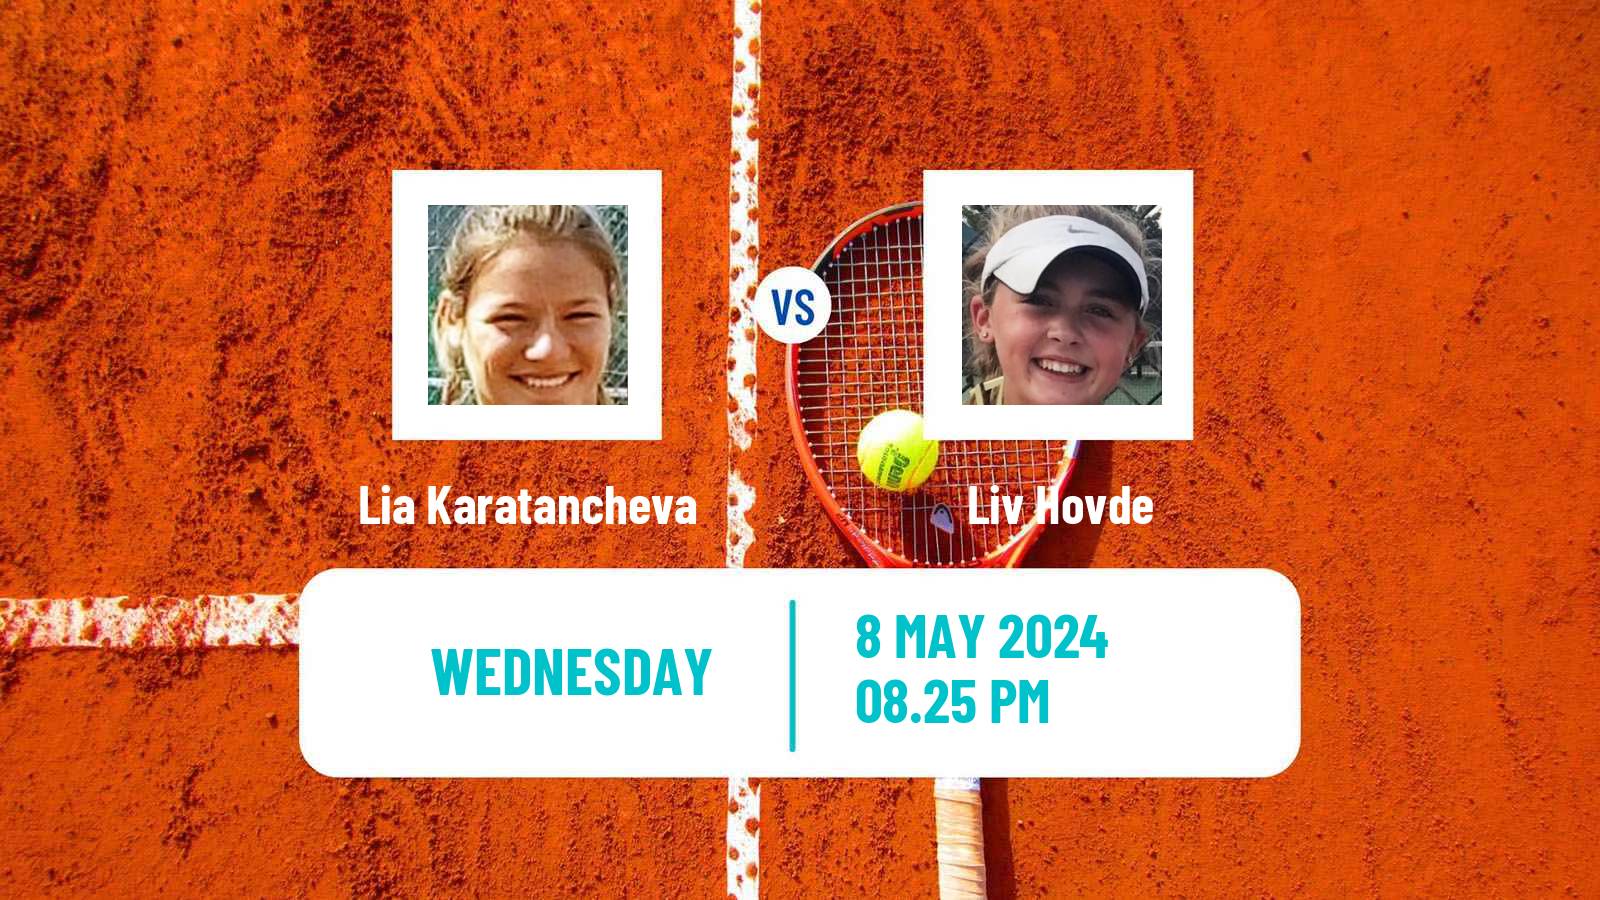 Tennis ITF W75 Zephyrhills Fl Women Lia Karatancheva - Liv Hovde